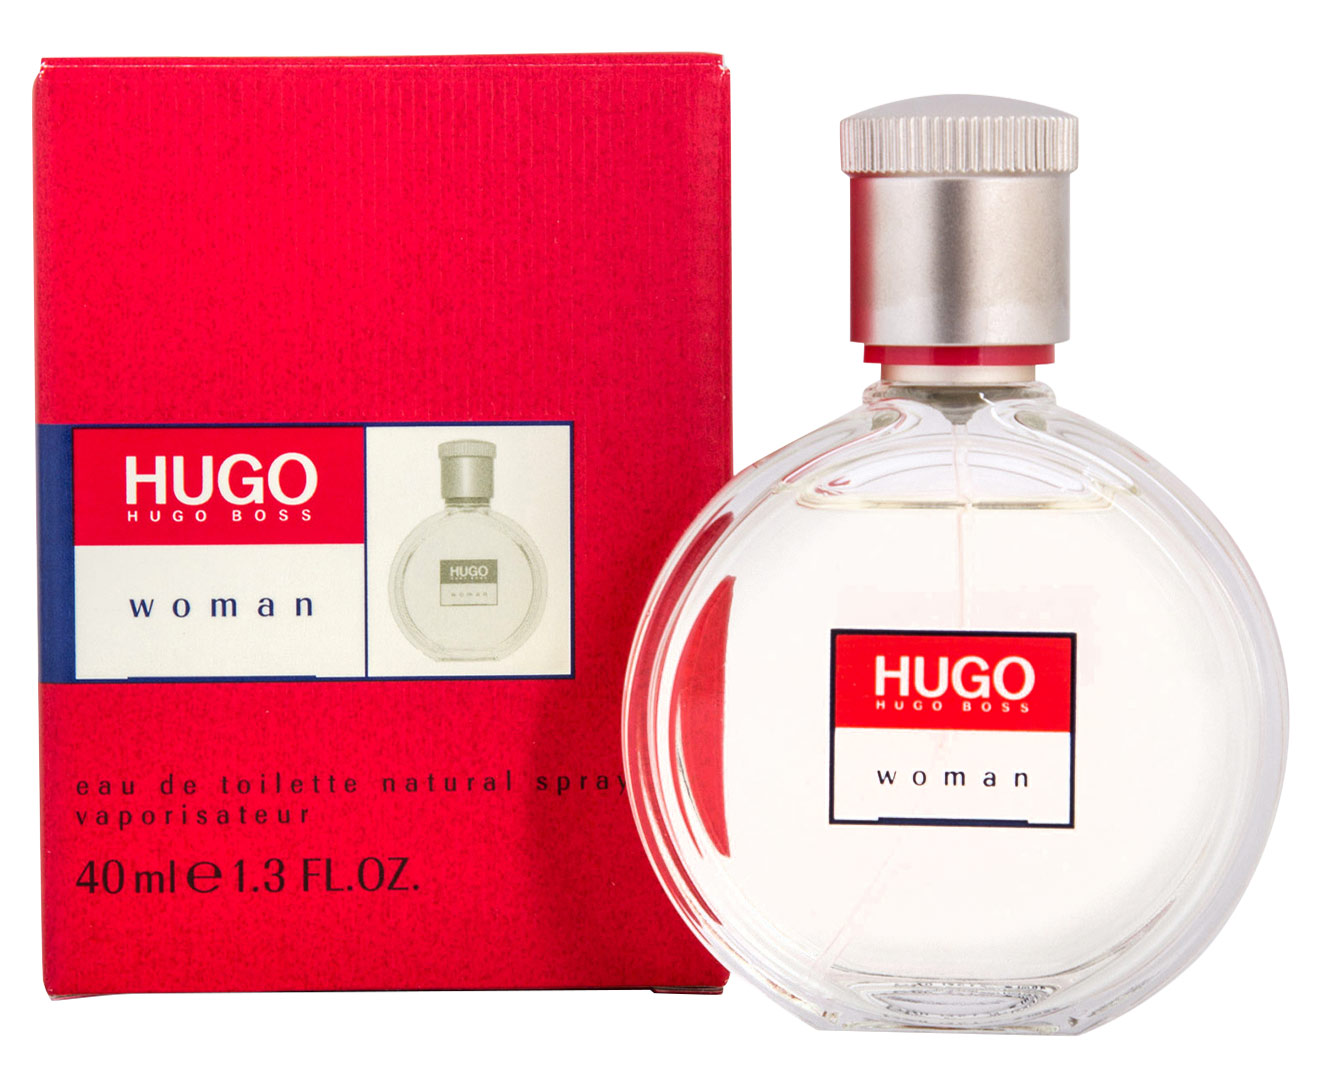 Купит hugo woman. Hugo Boss Hugo woman Eau de Toilette. Хуго босс Вумен красные. Хьюго босс Вумен. Хьюго босс женские красные круглые.